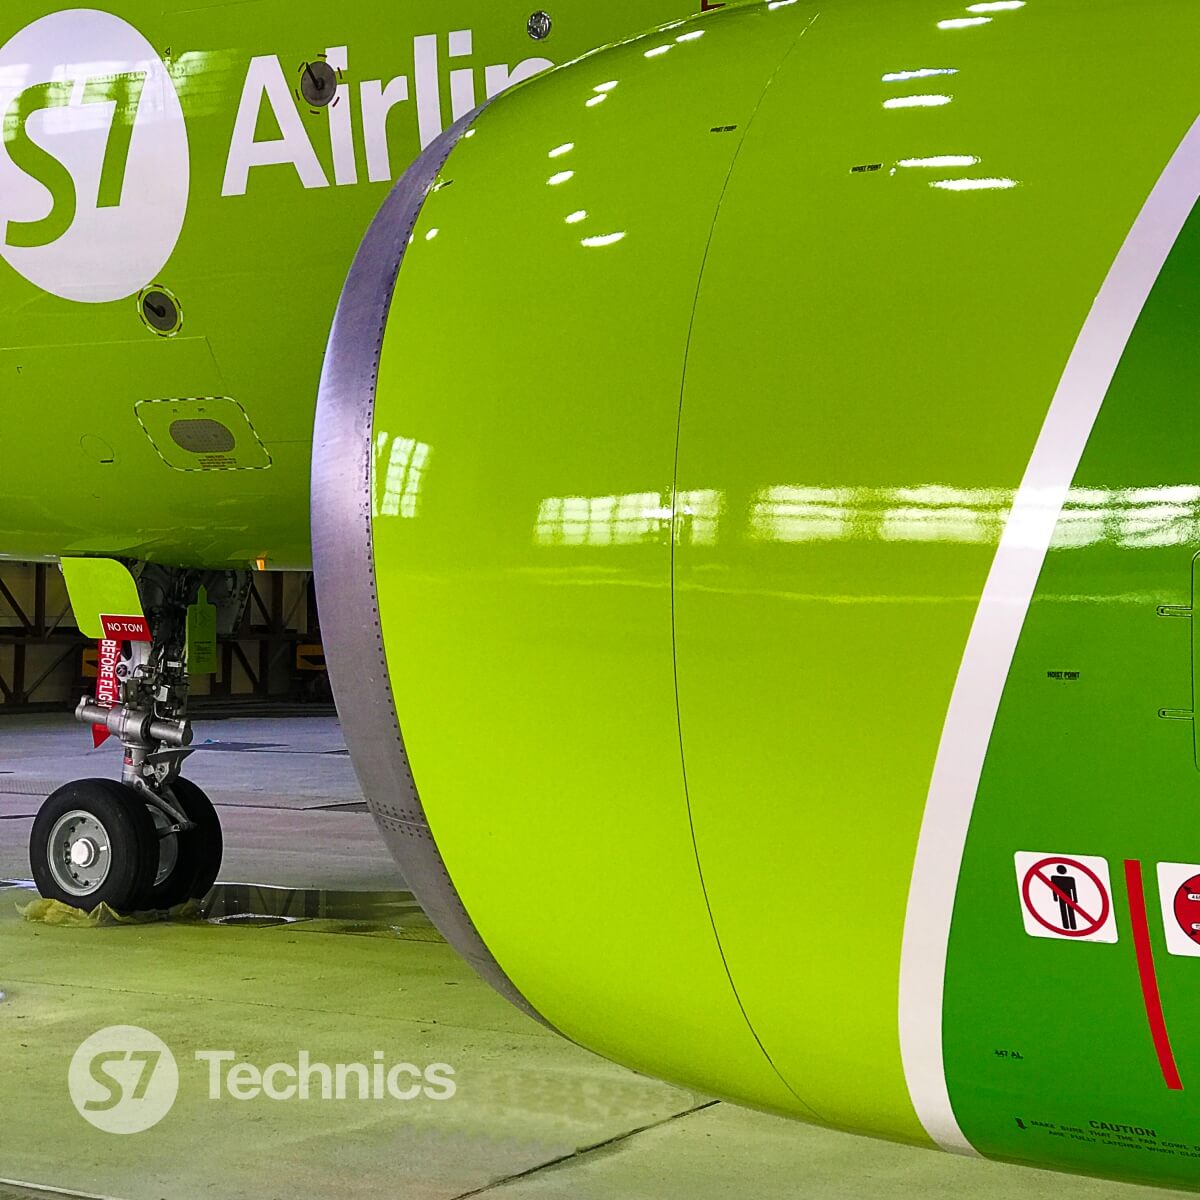 S7 Technics paints S7 Airlines’ aircraft